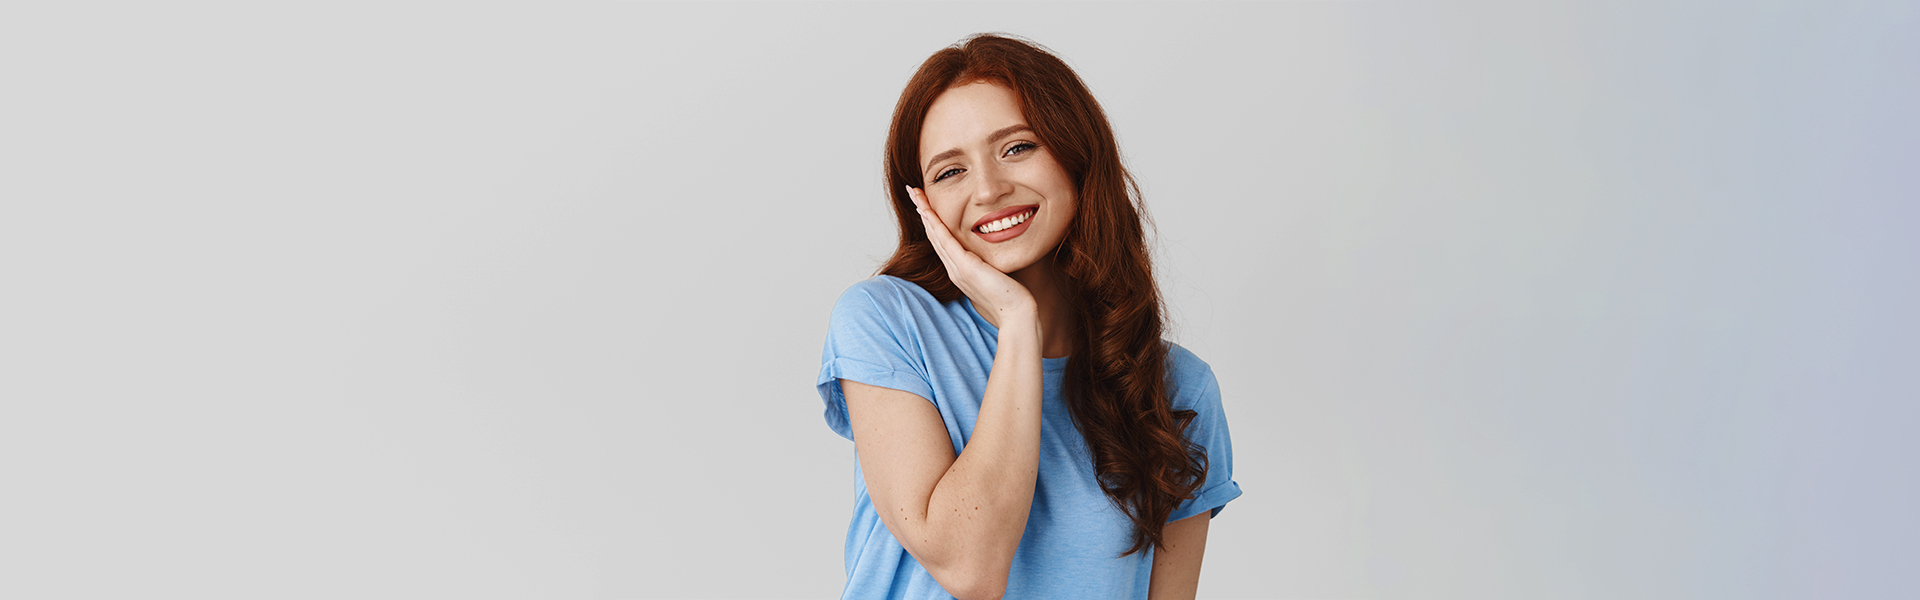 How to Rejuvenate Your Smile Using Dental Caps